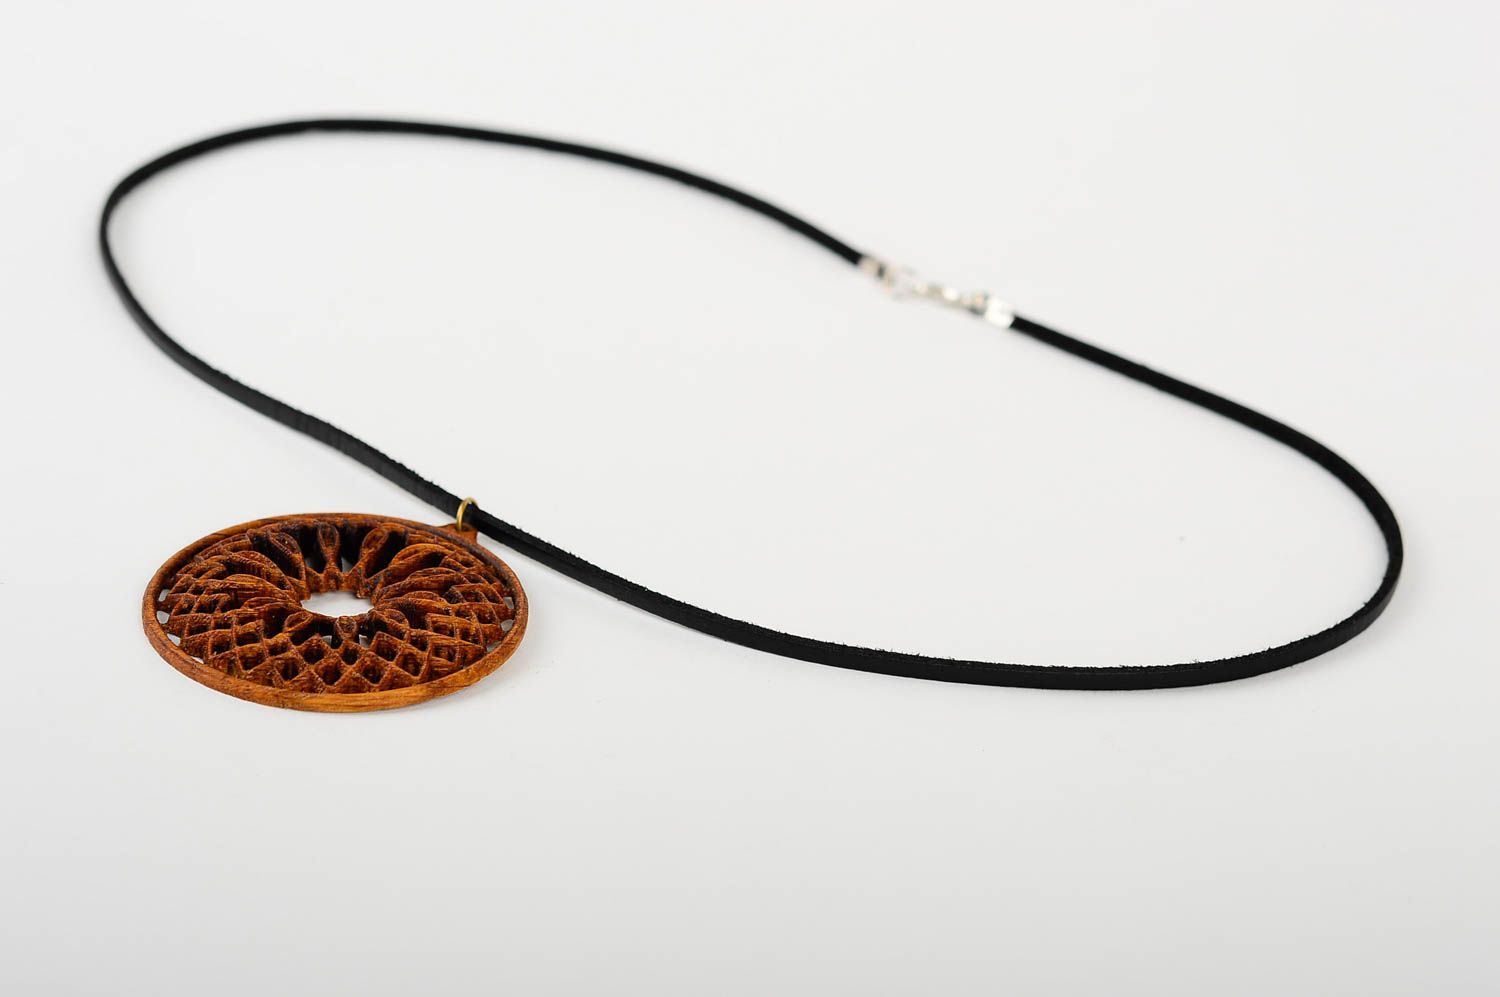 Handmade pendant unusual accessory gift ideas wooden pendant for women photo 4